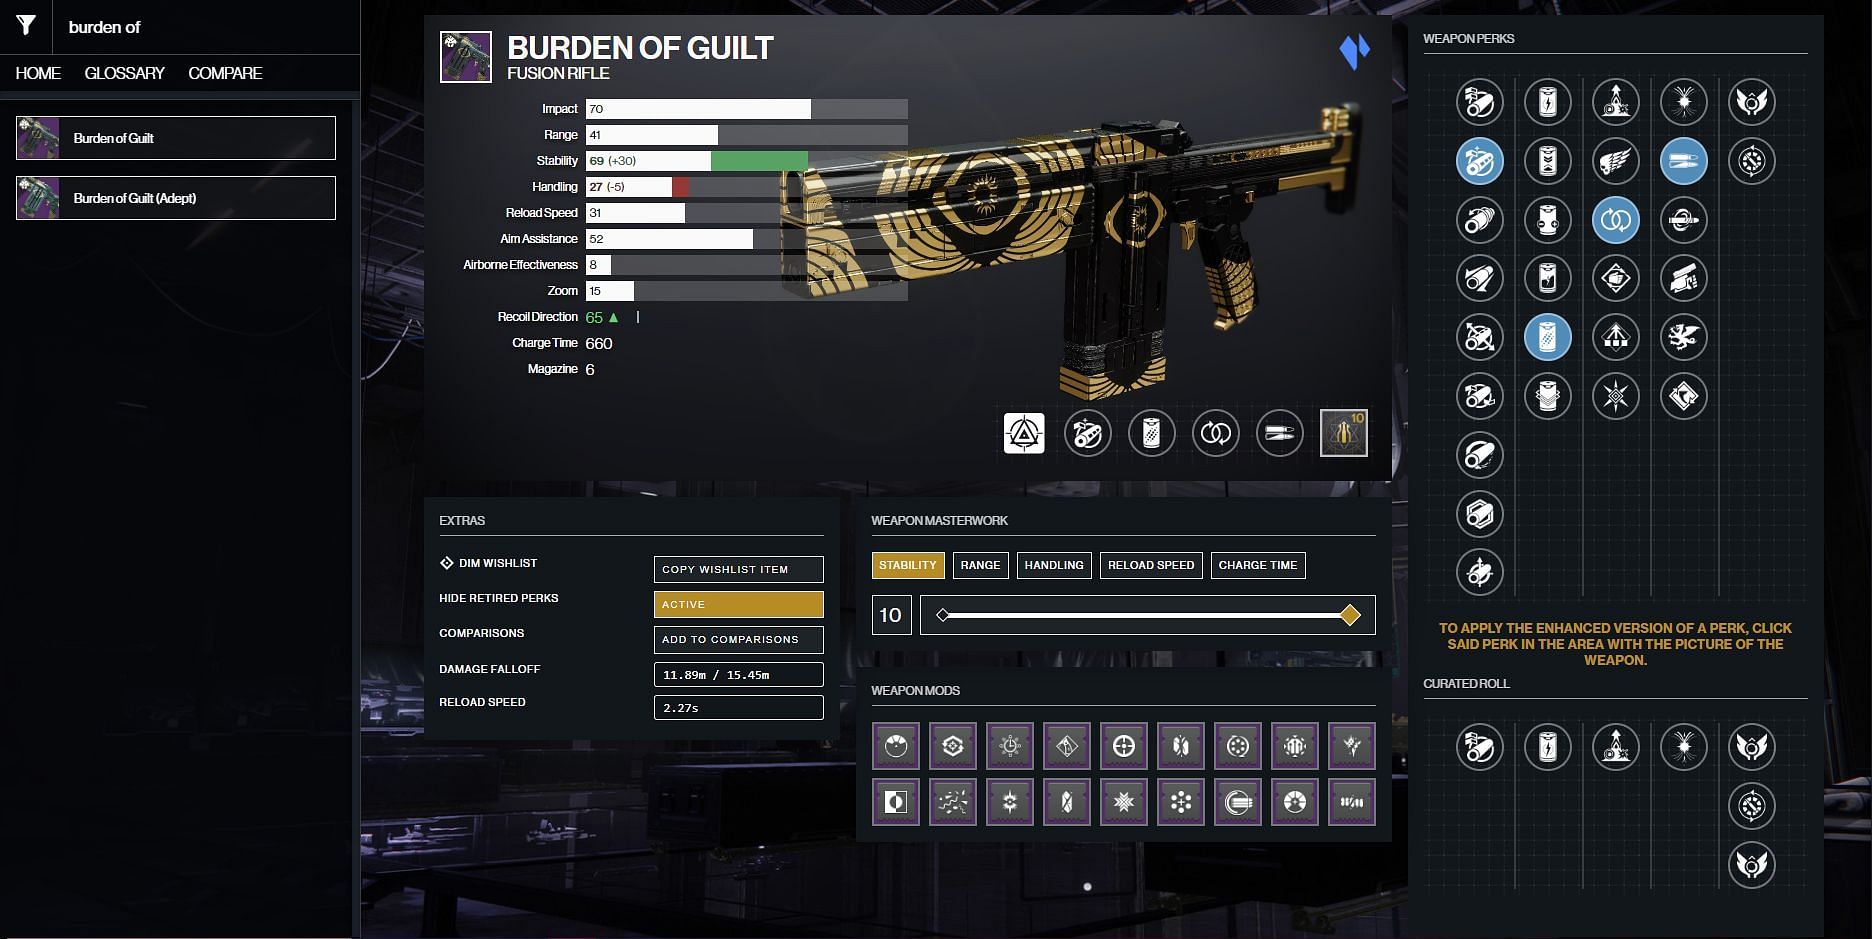 Burden of Guilt PvP god roll (Image via Destiny 2 Gunsmith)